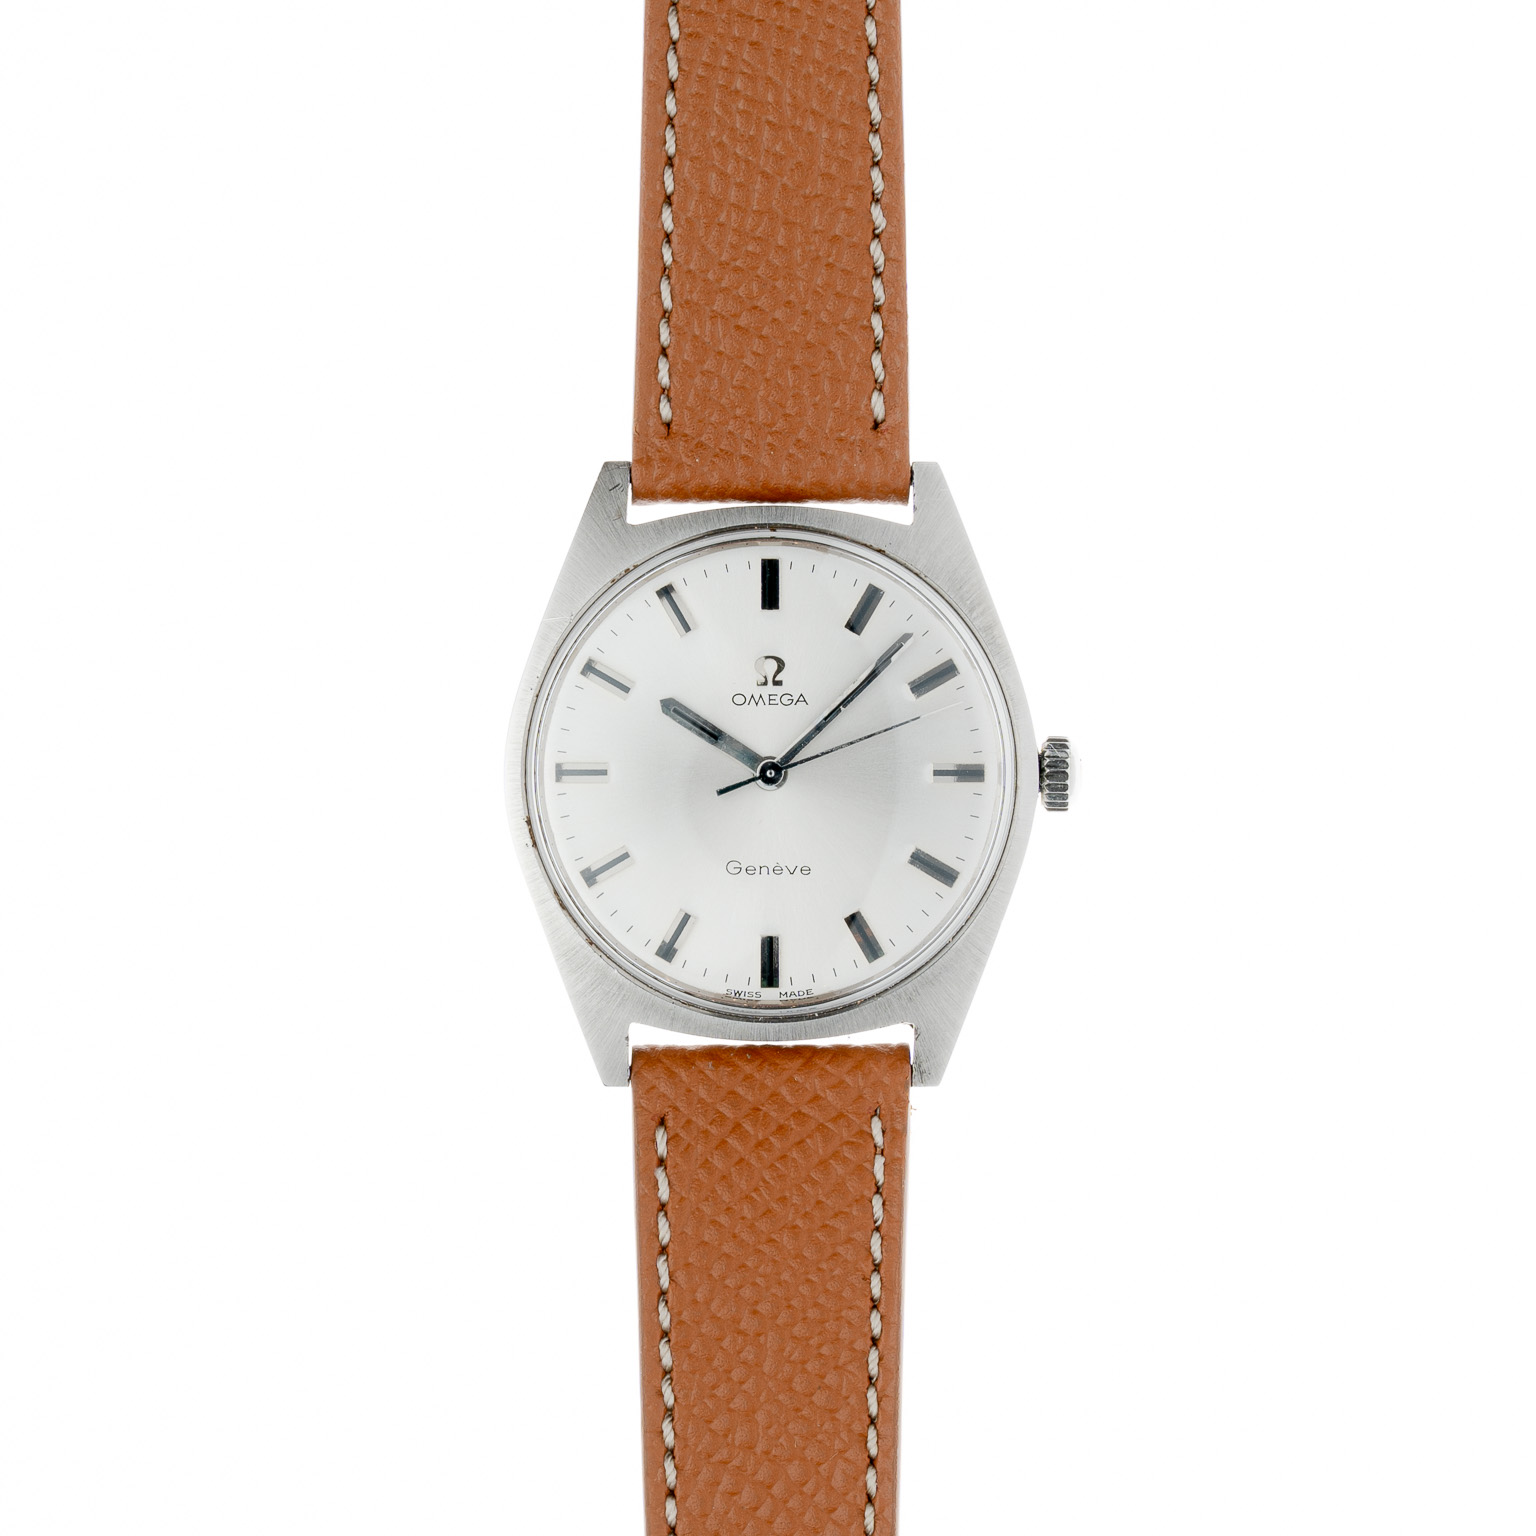 Omega Genéve 135.041 watch